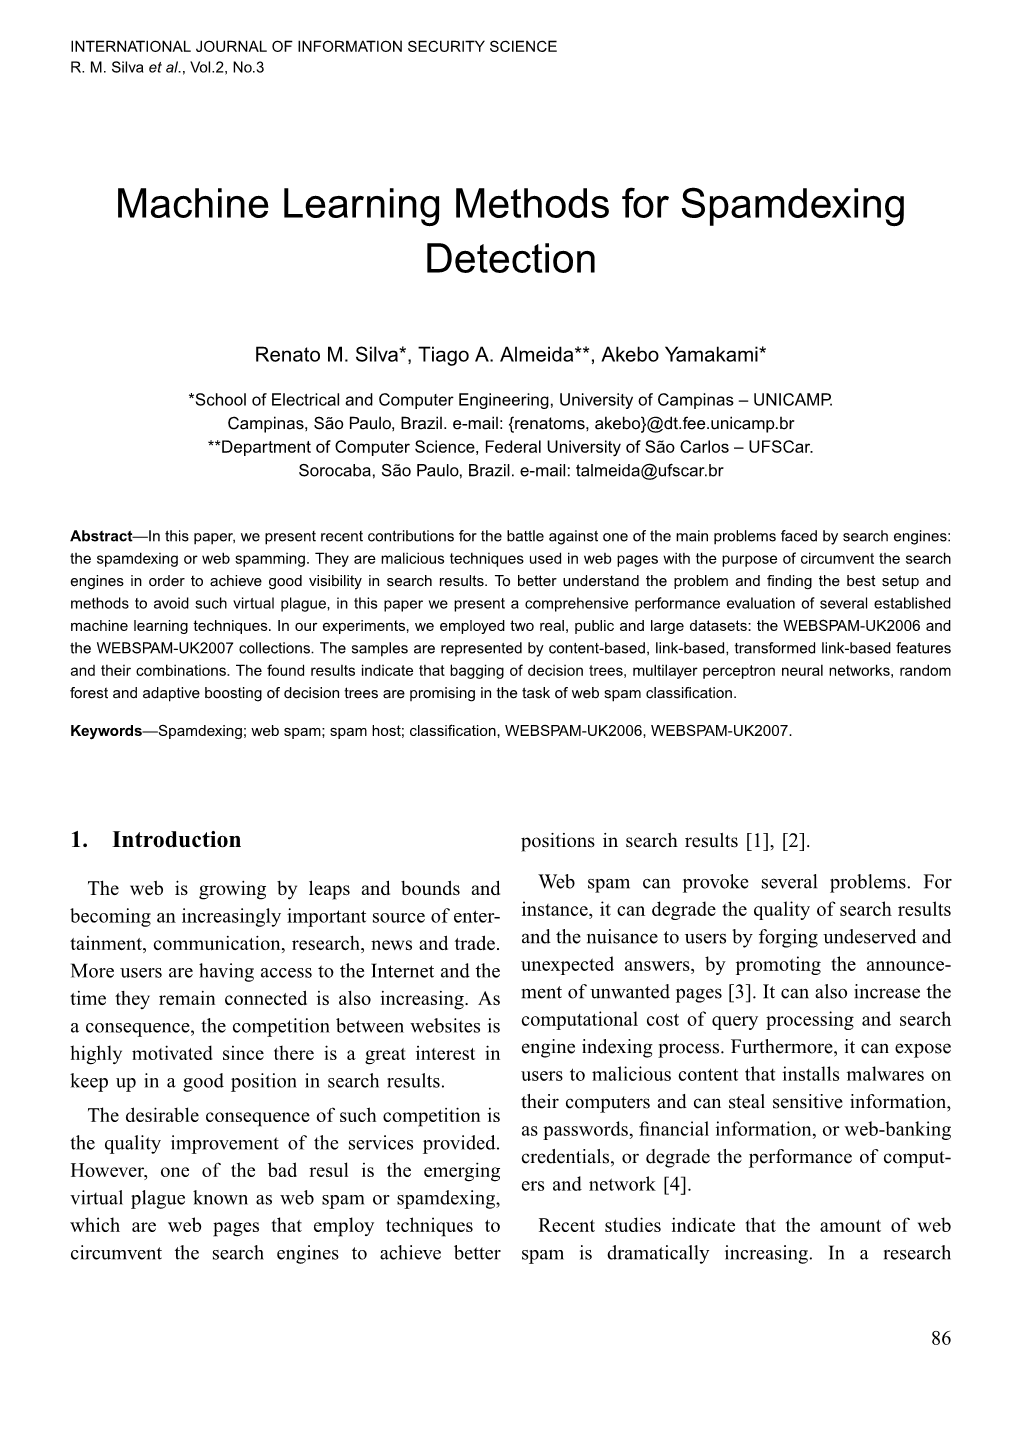 Machine Learning Methods for Spamdexing Detection